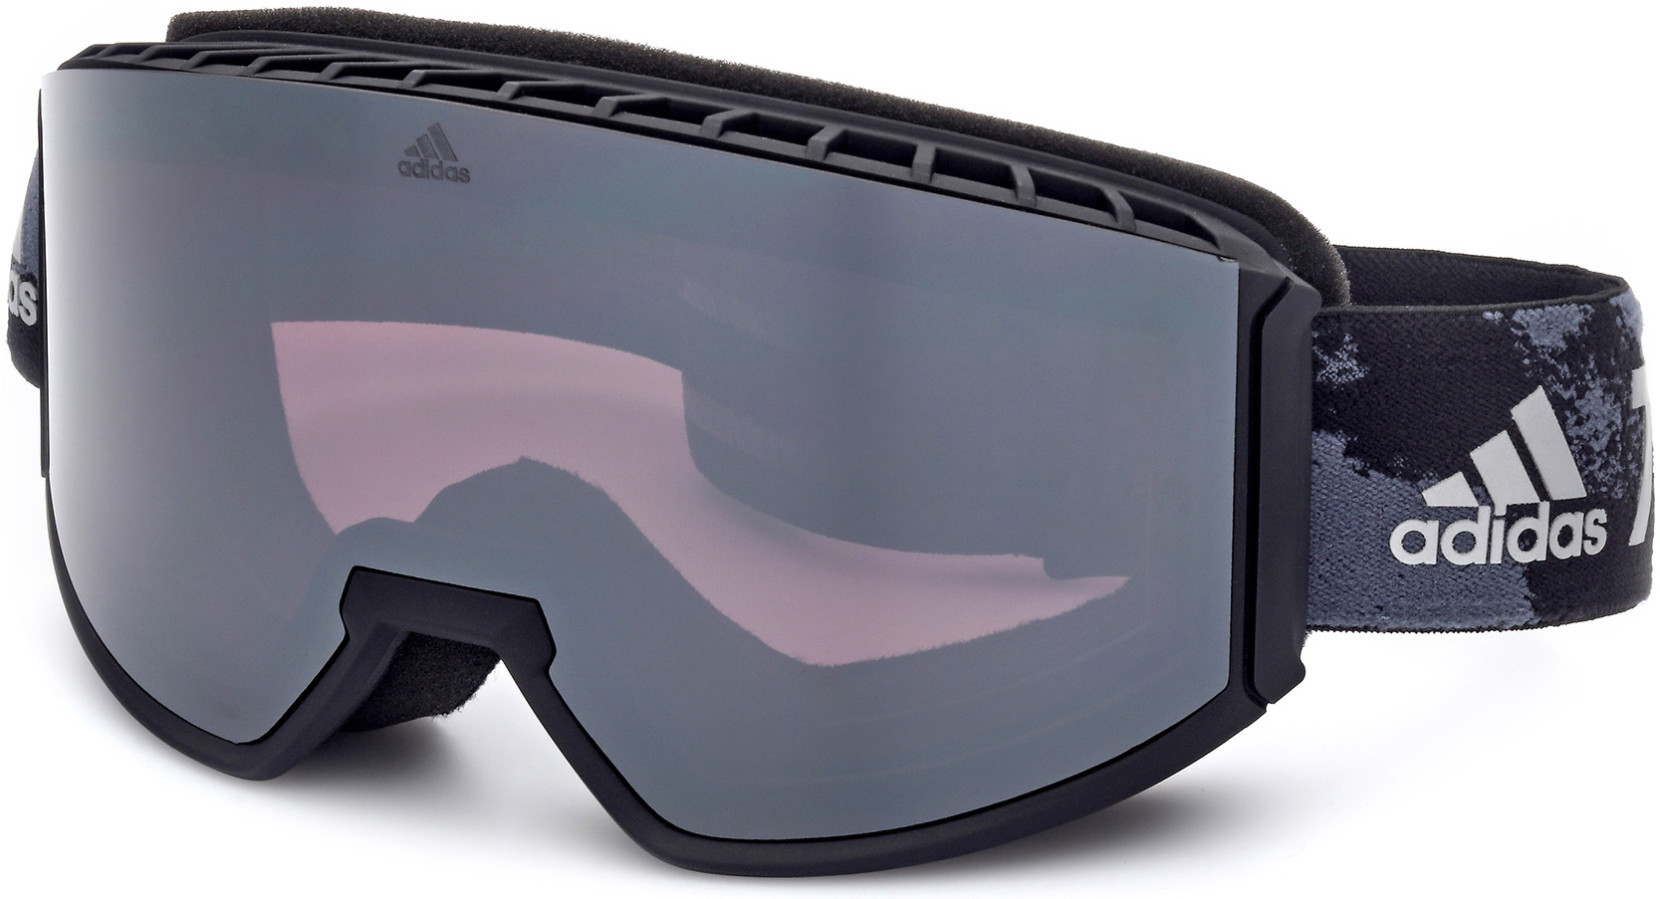 adidas SP0040 Sports Eyewear - adidas Authorized Retailer | coolframes.com